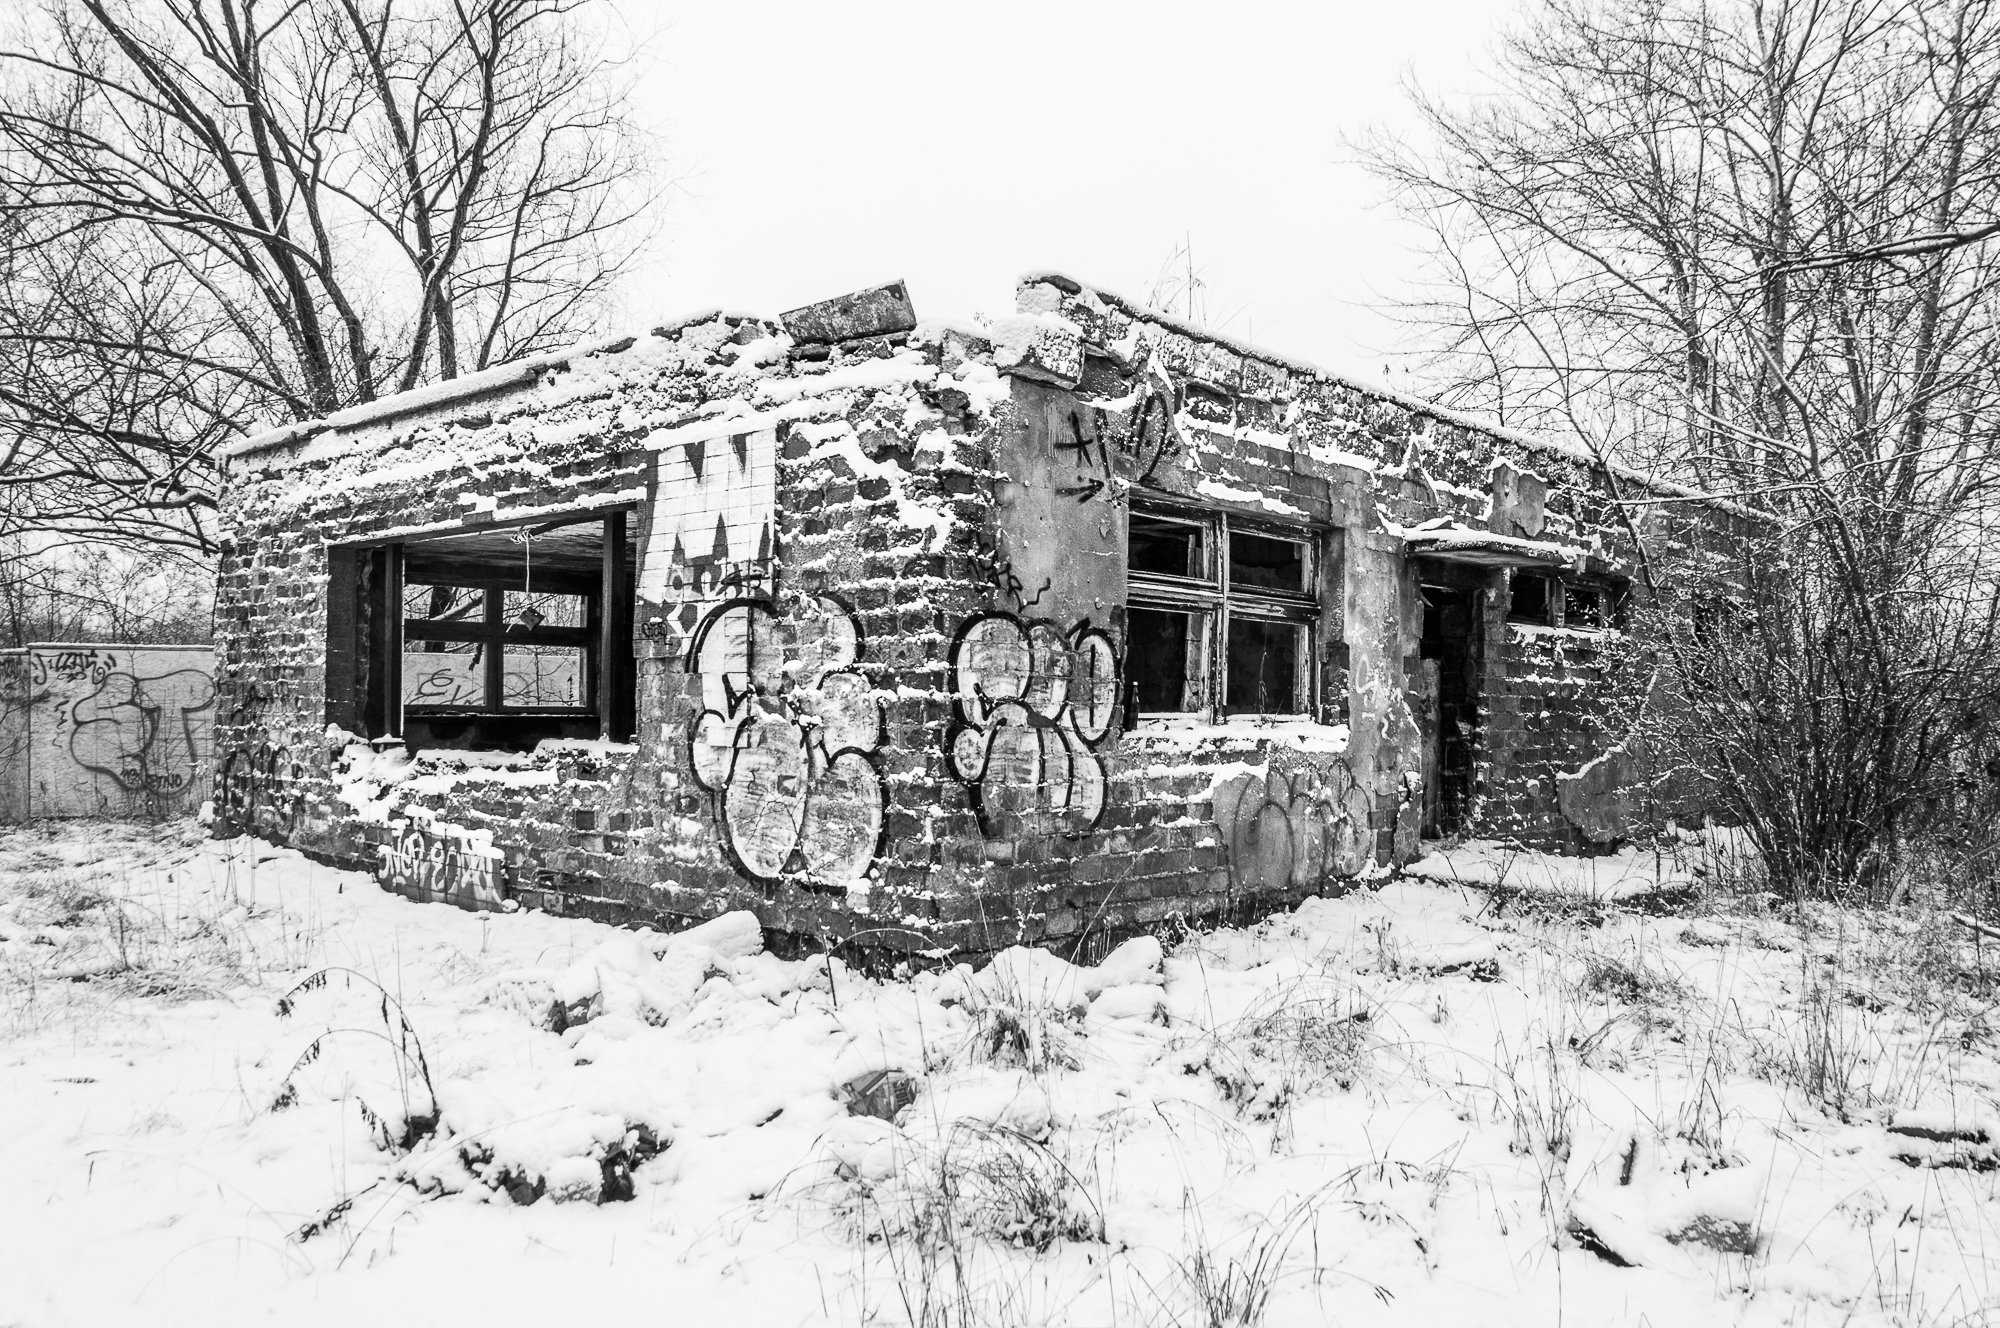 Adam Mazek Photography Warsaw (Warszawa) 2019. Post: "One of the worst nightmares." Ruins in the snow. Minimalism.